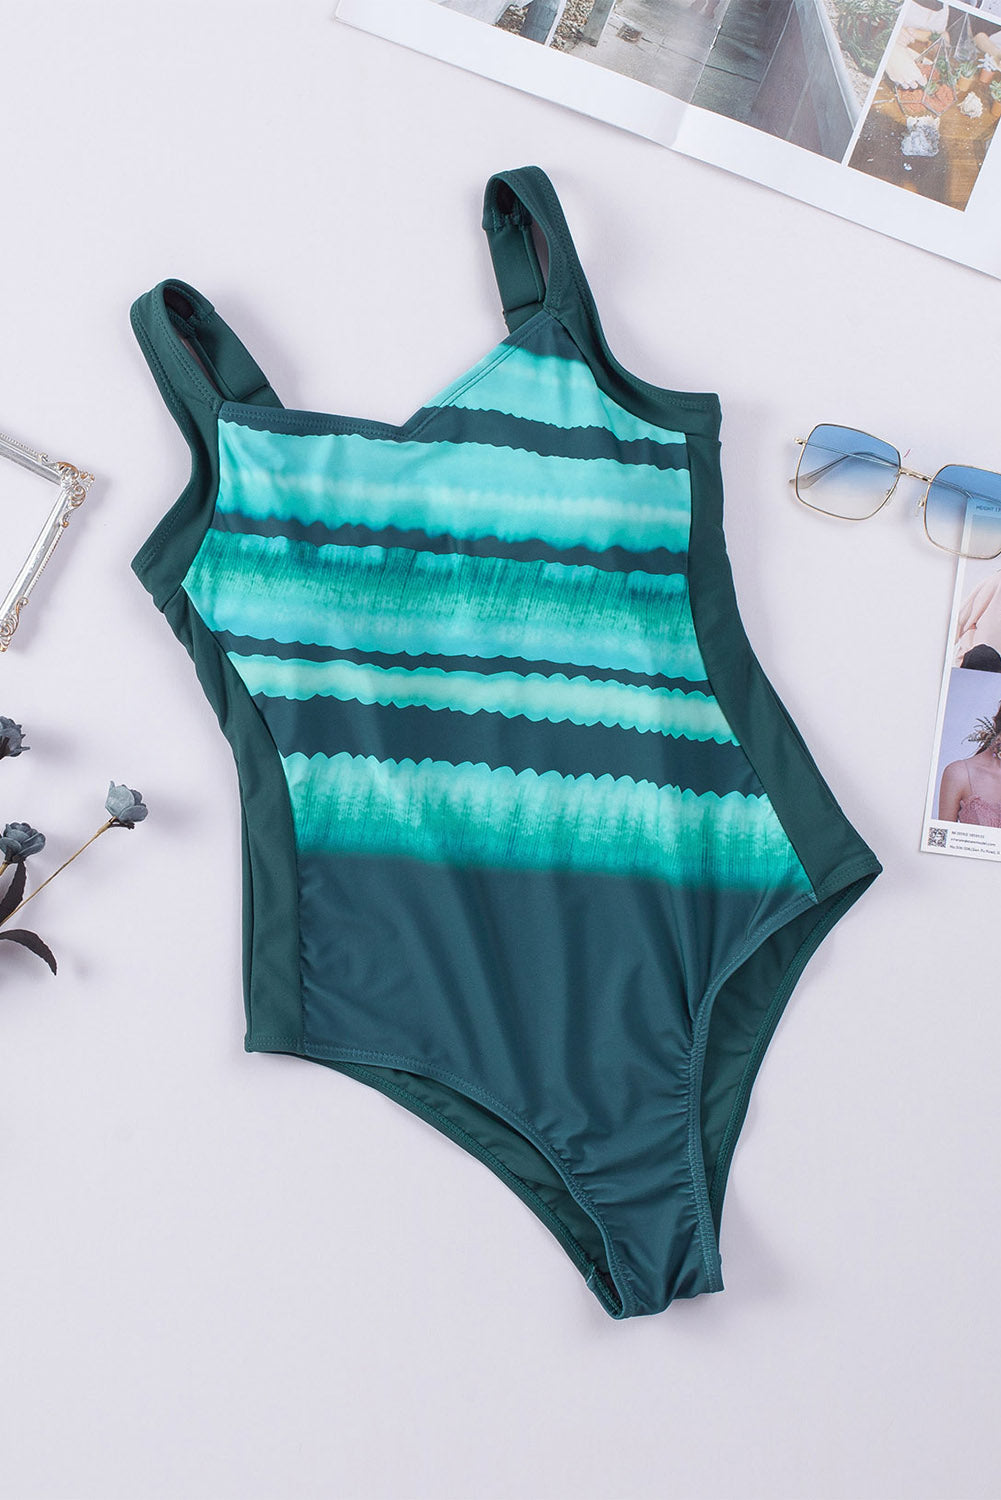 LC442787-104-S, LC442787-104-M, LC442787-104-L, LC442787-104-XL, LC442787-104-2XL, Sky Blue Women's One Piece Swimsuit Striped Pattern Print Sleeveless Bathing Suit